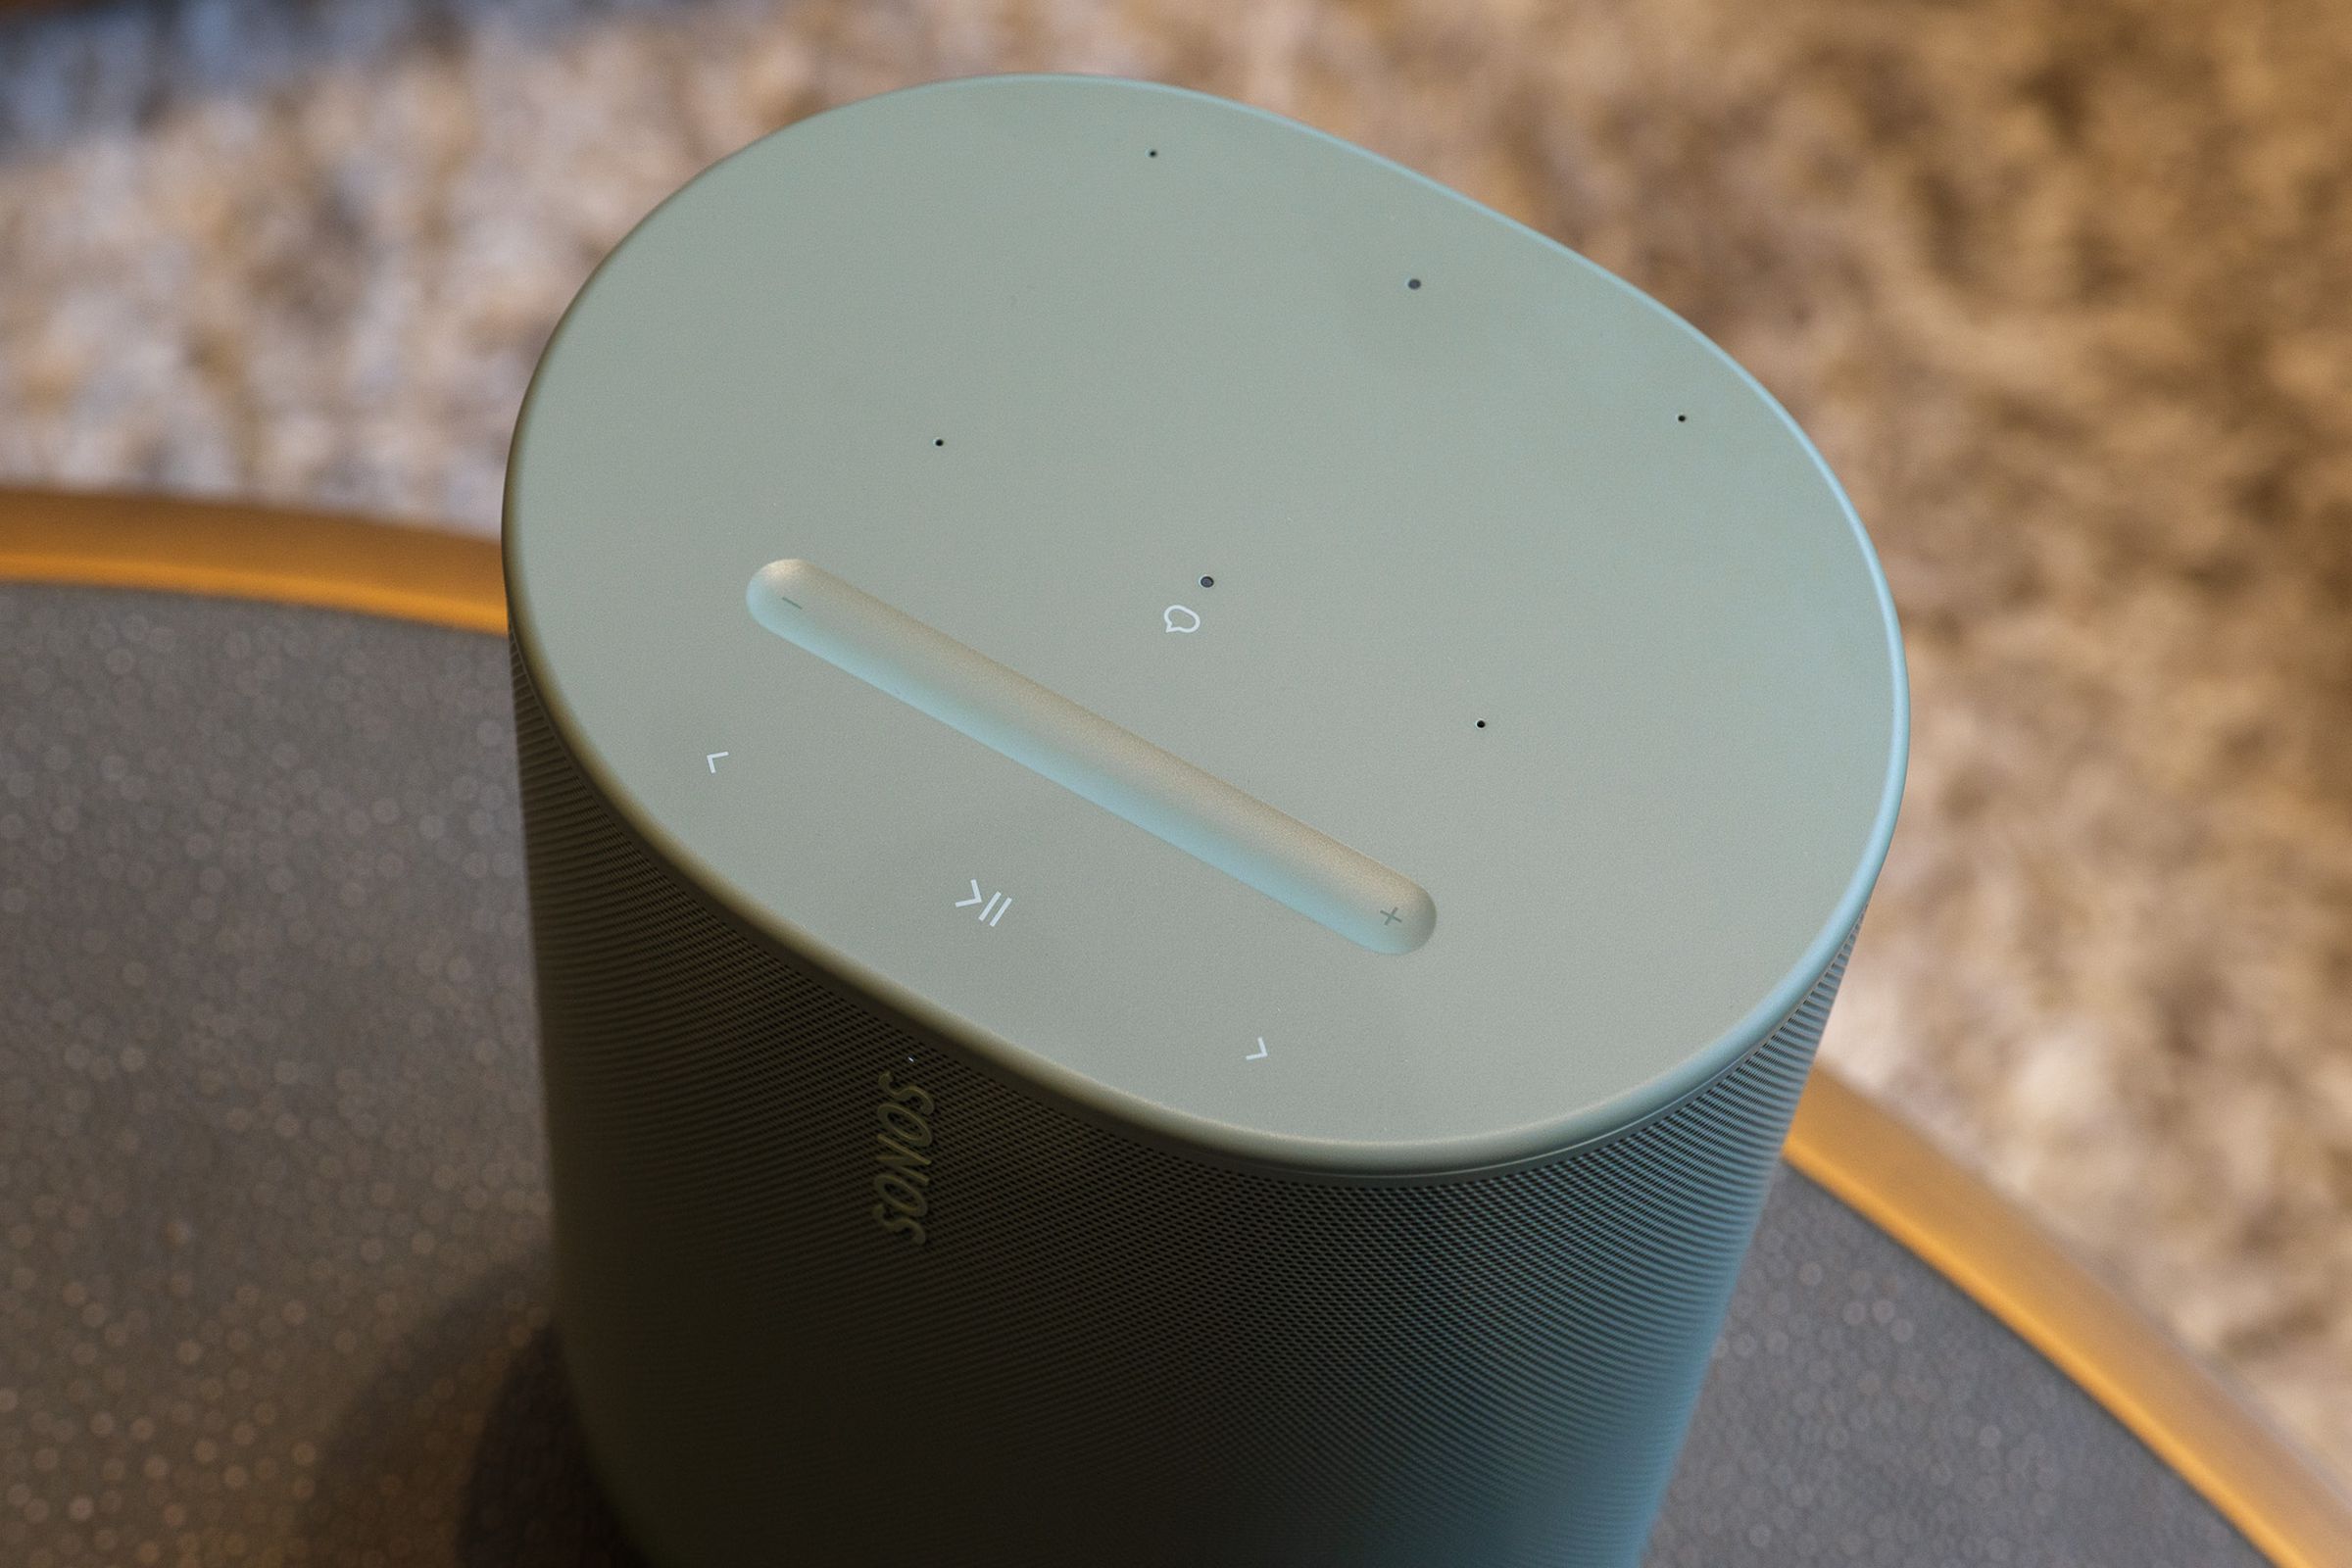 A photo of Sonos’ Move 2 portable speaker.